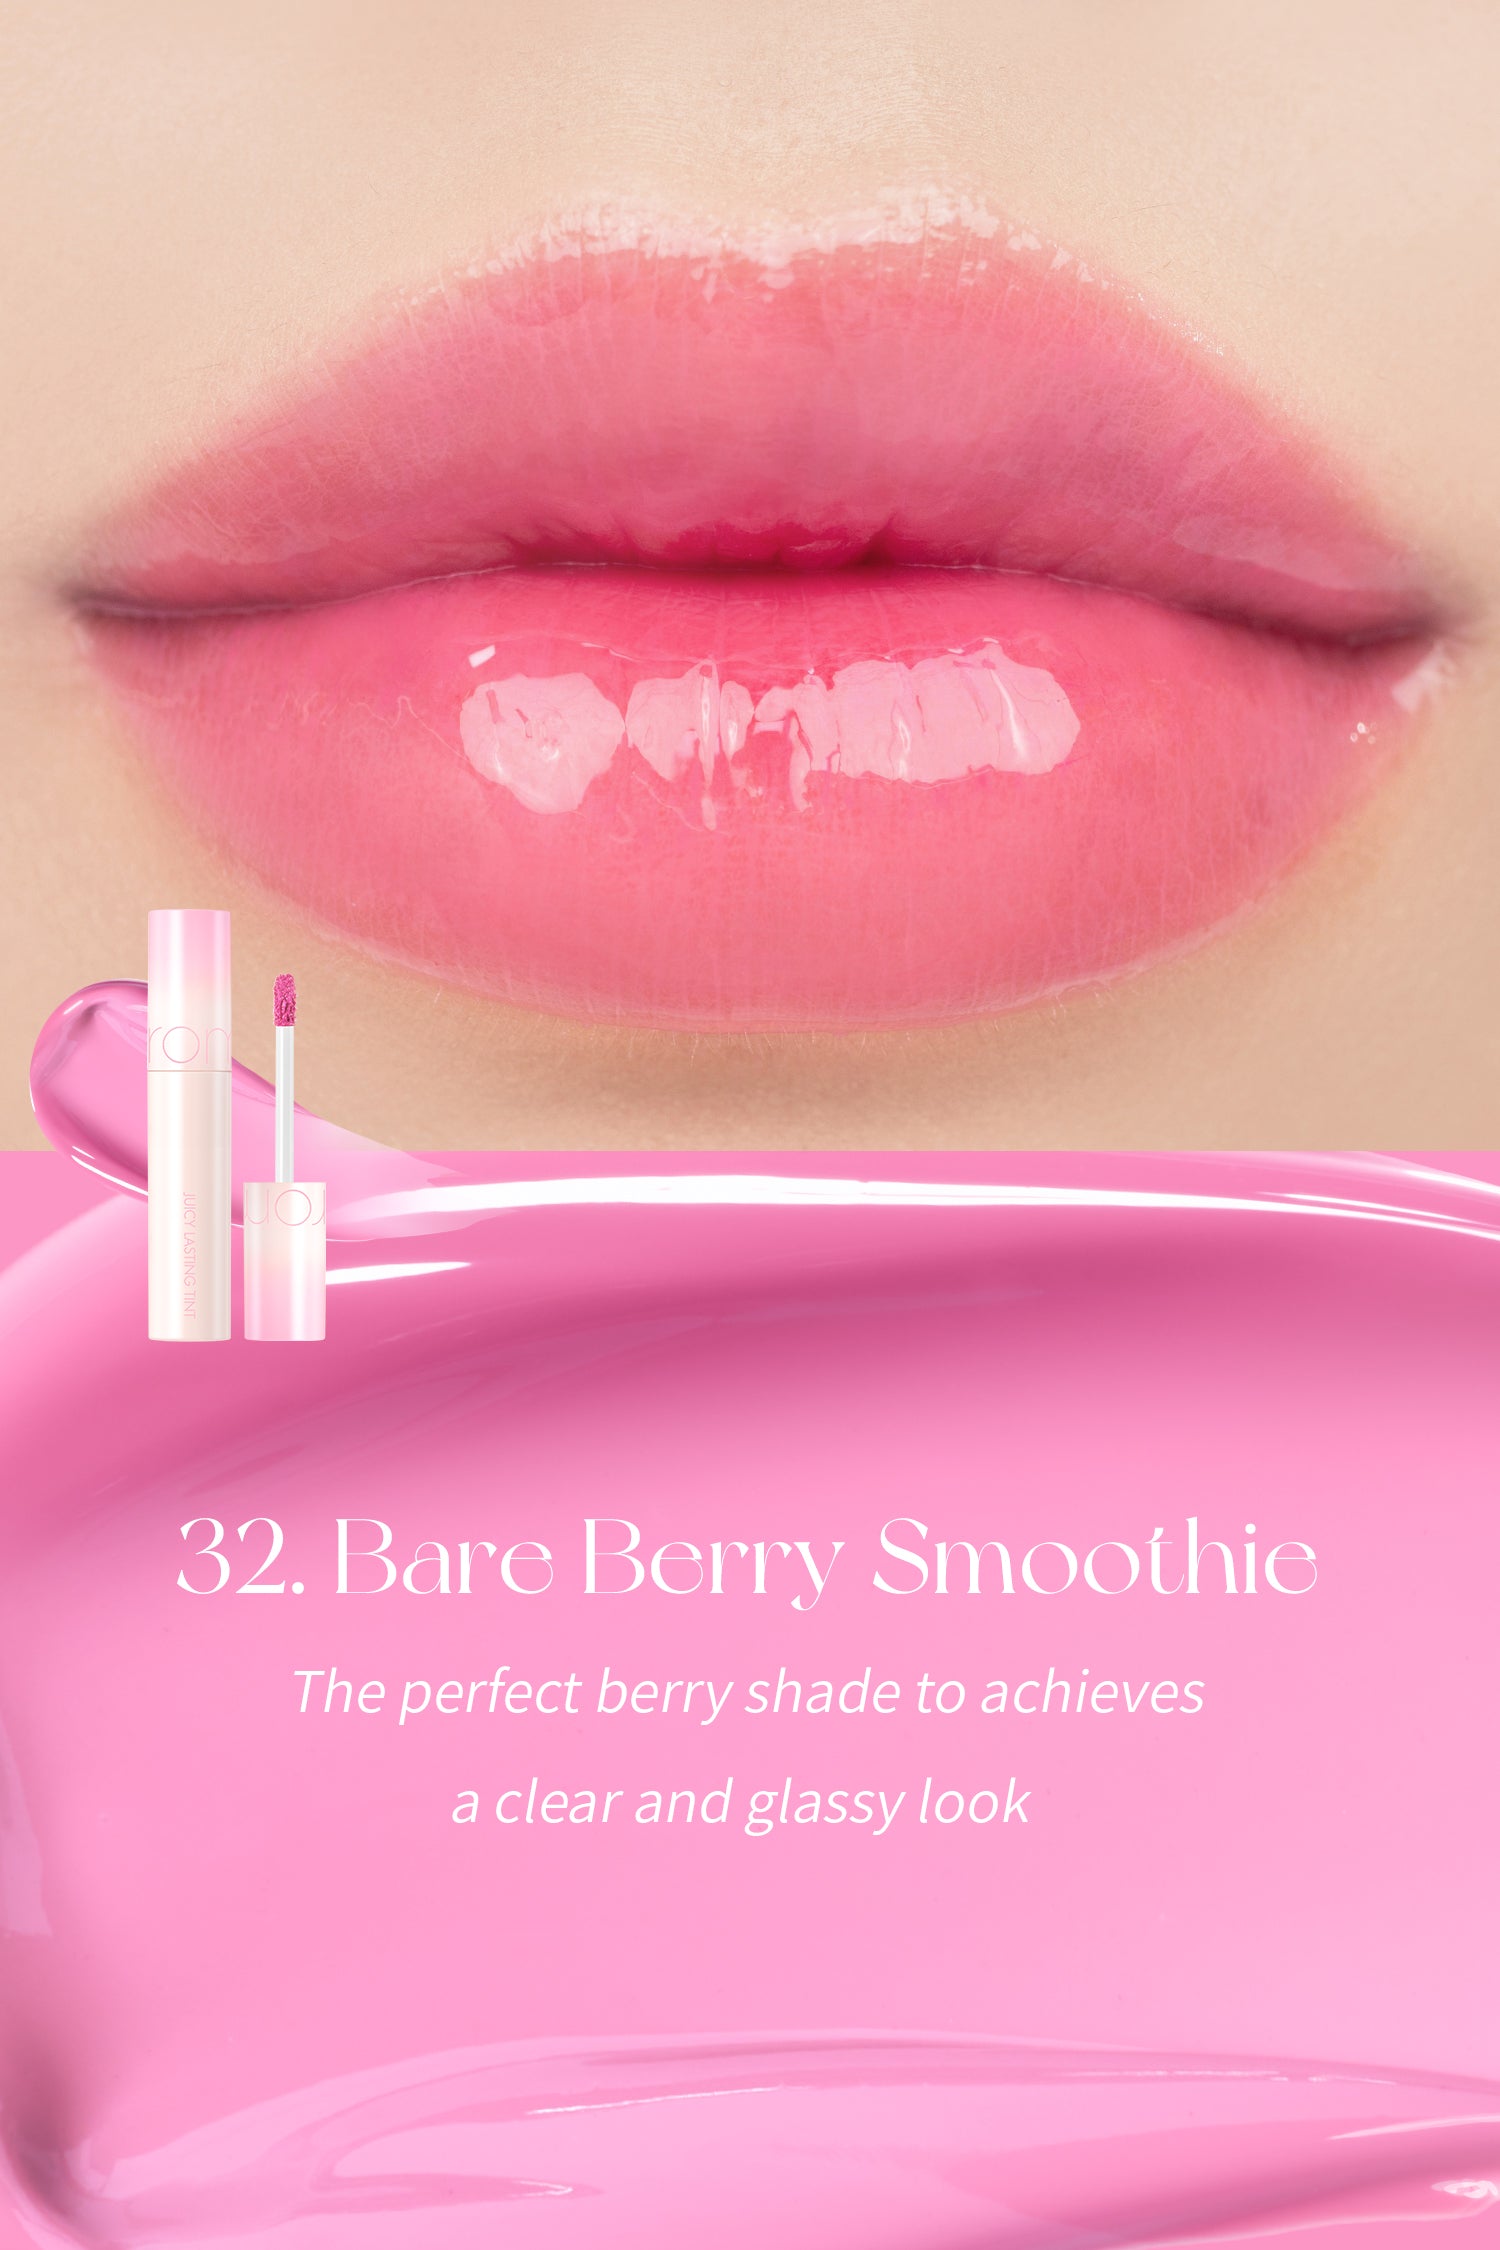 Romand Summer Pink Series Juicy Lasting Lip Tint 5.5 g, 26 Very Berry Pink